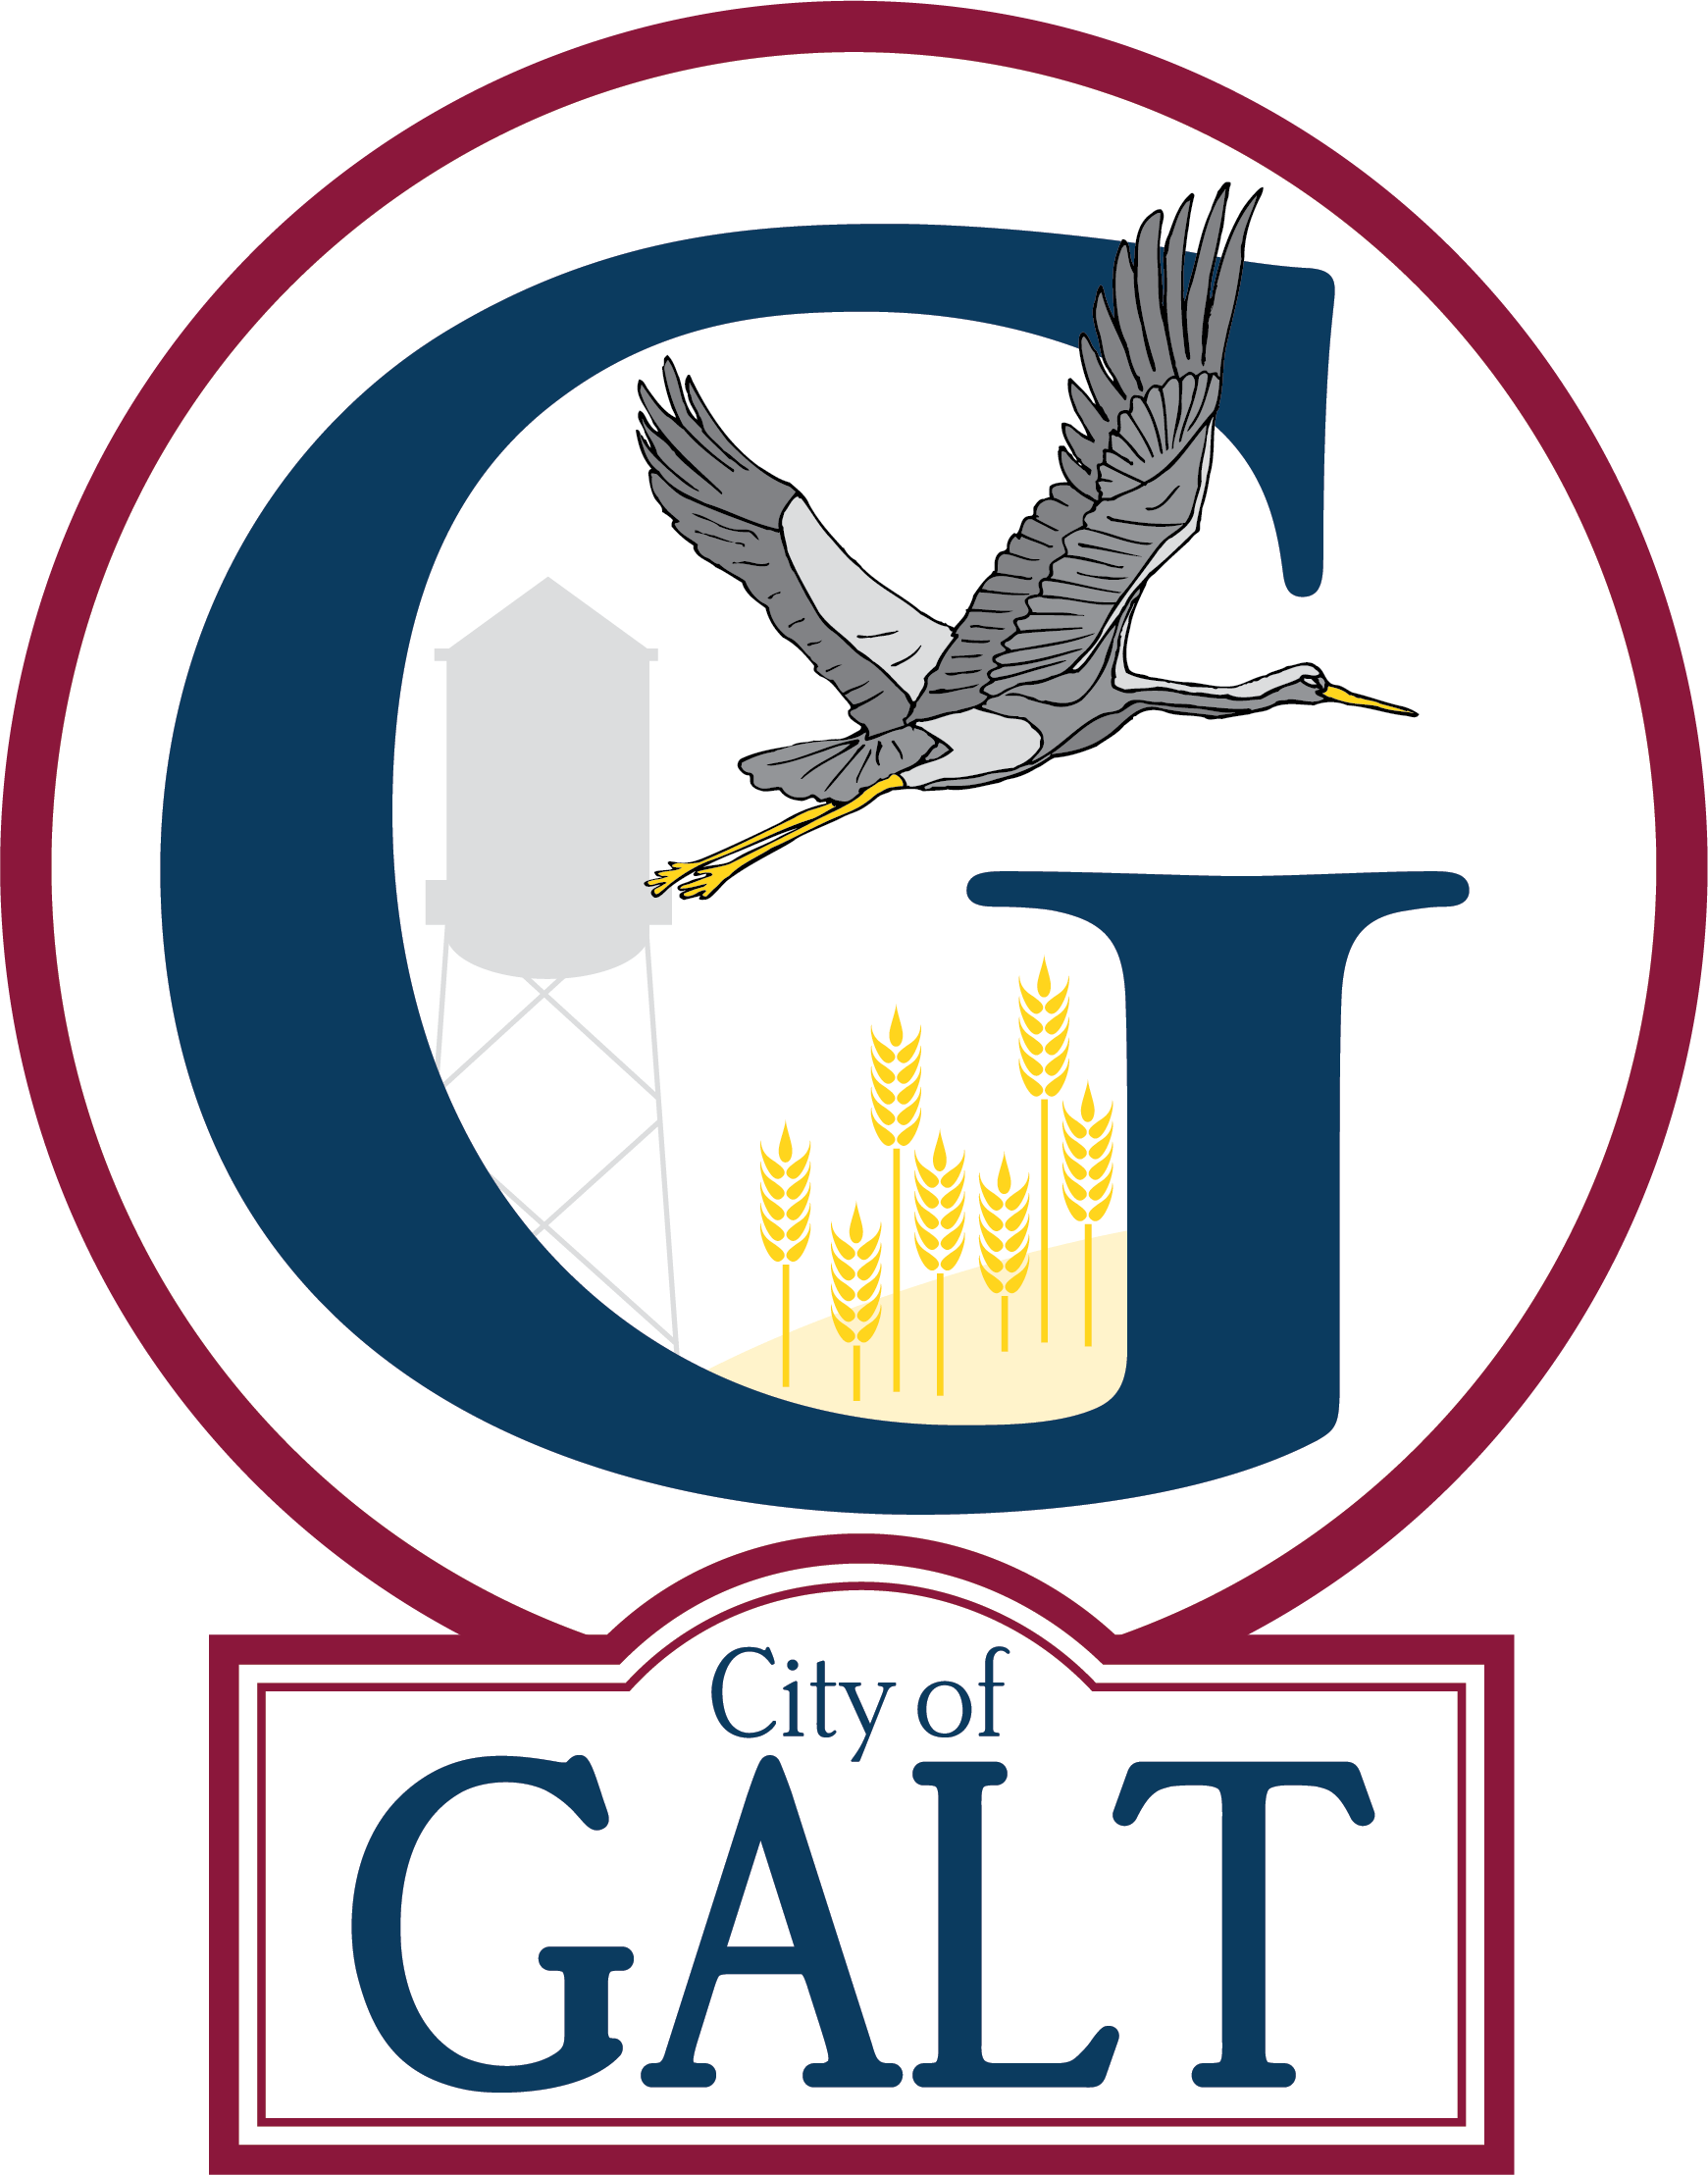 City of Galt logo